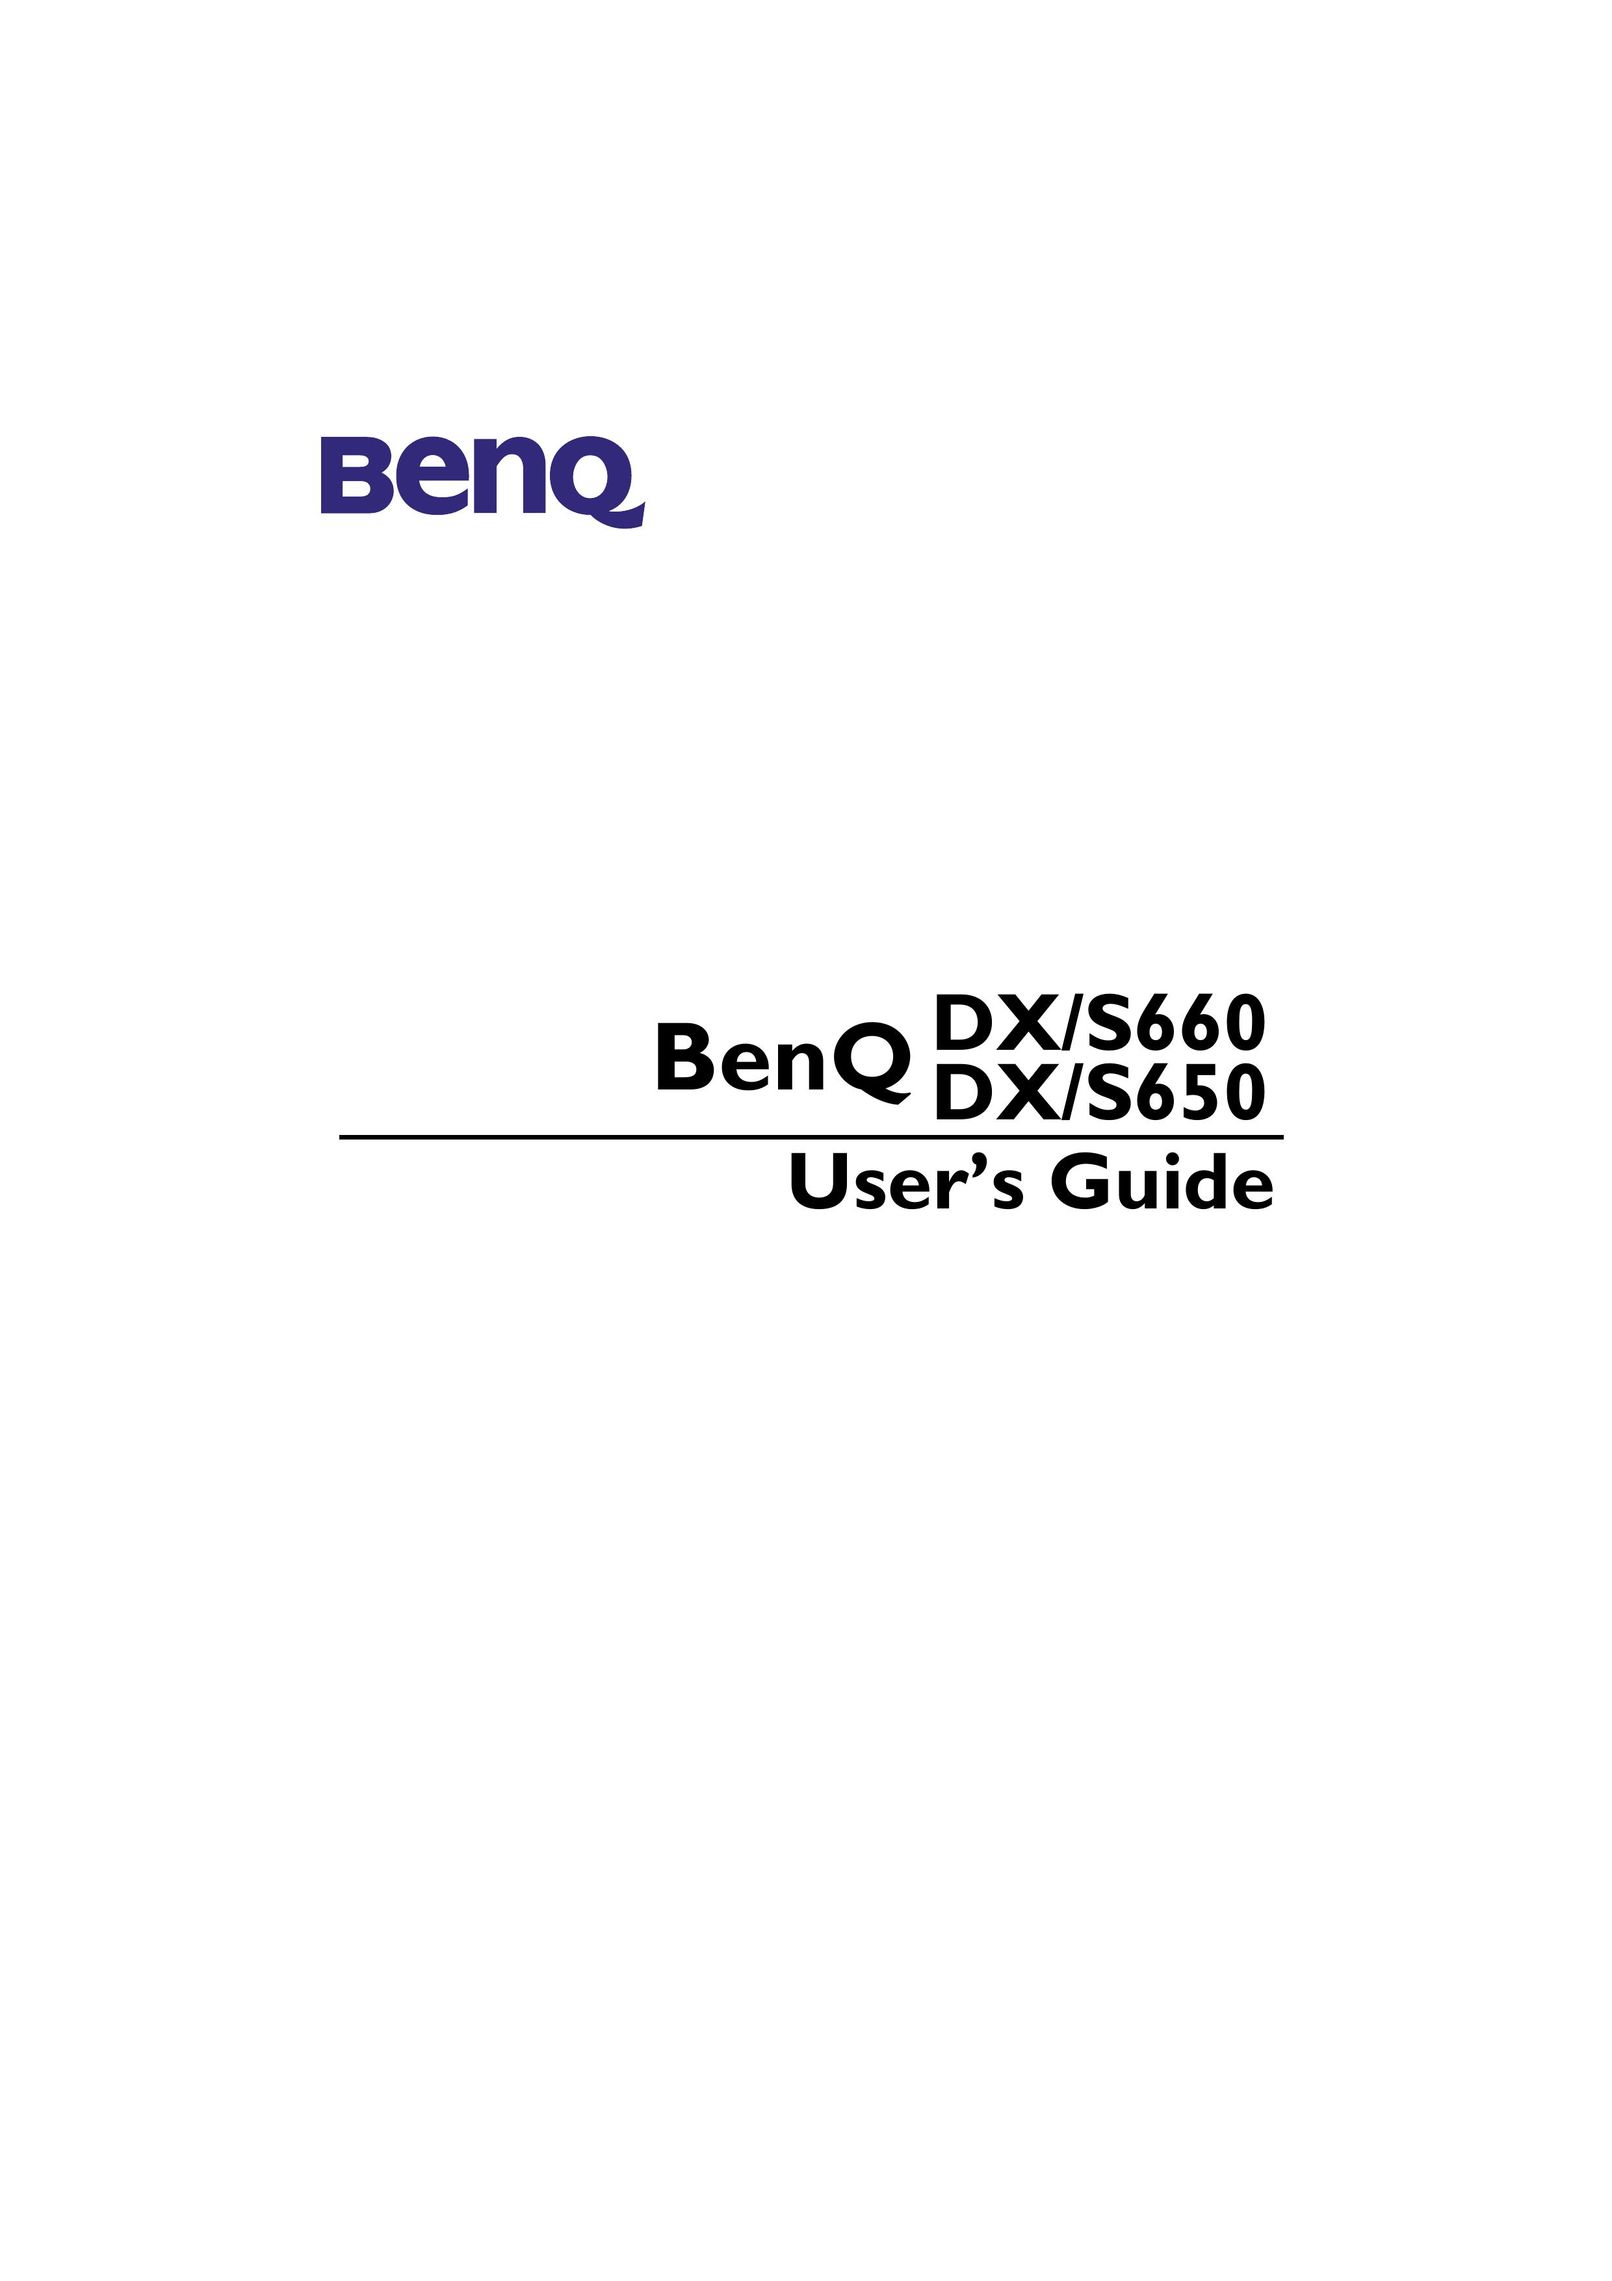 BenQ DX/S650 Projector User Manual